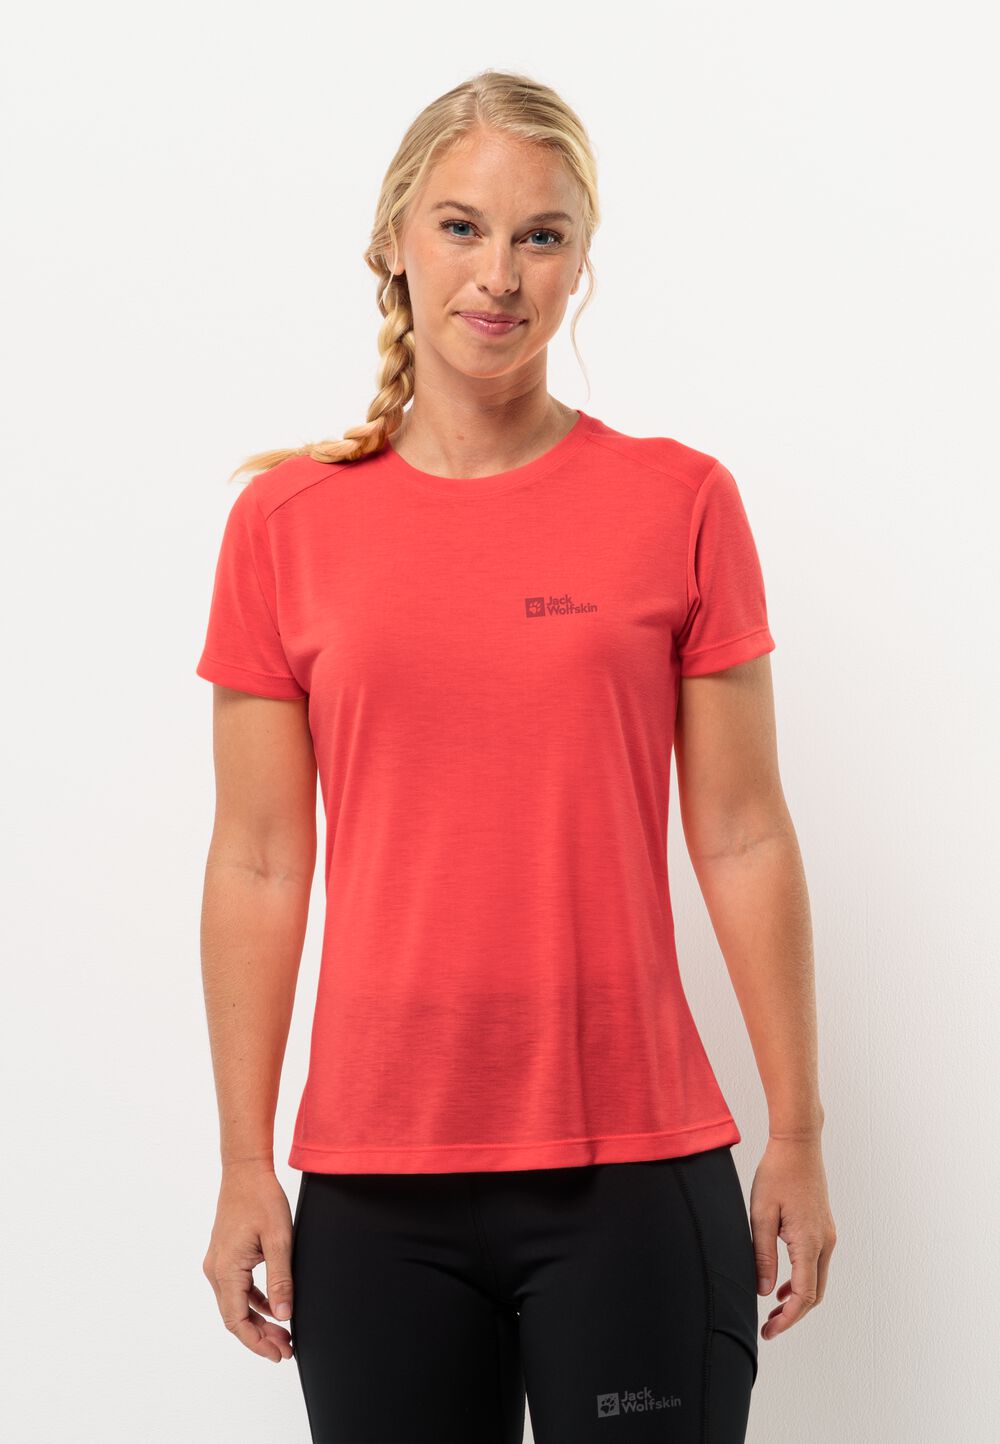 Jack Wolfskin Vonnan S S T-Shirt Women Functioneel shirt Dames M rood vibrant red